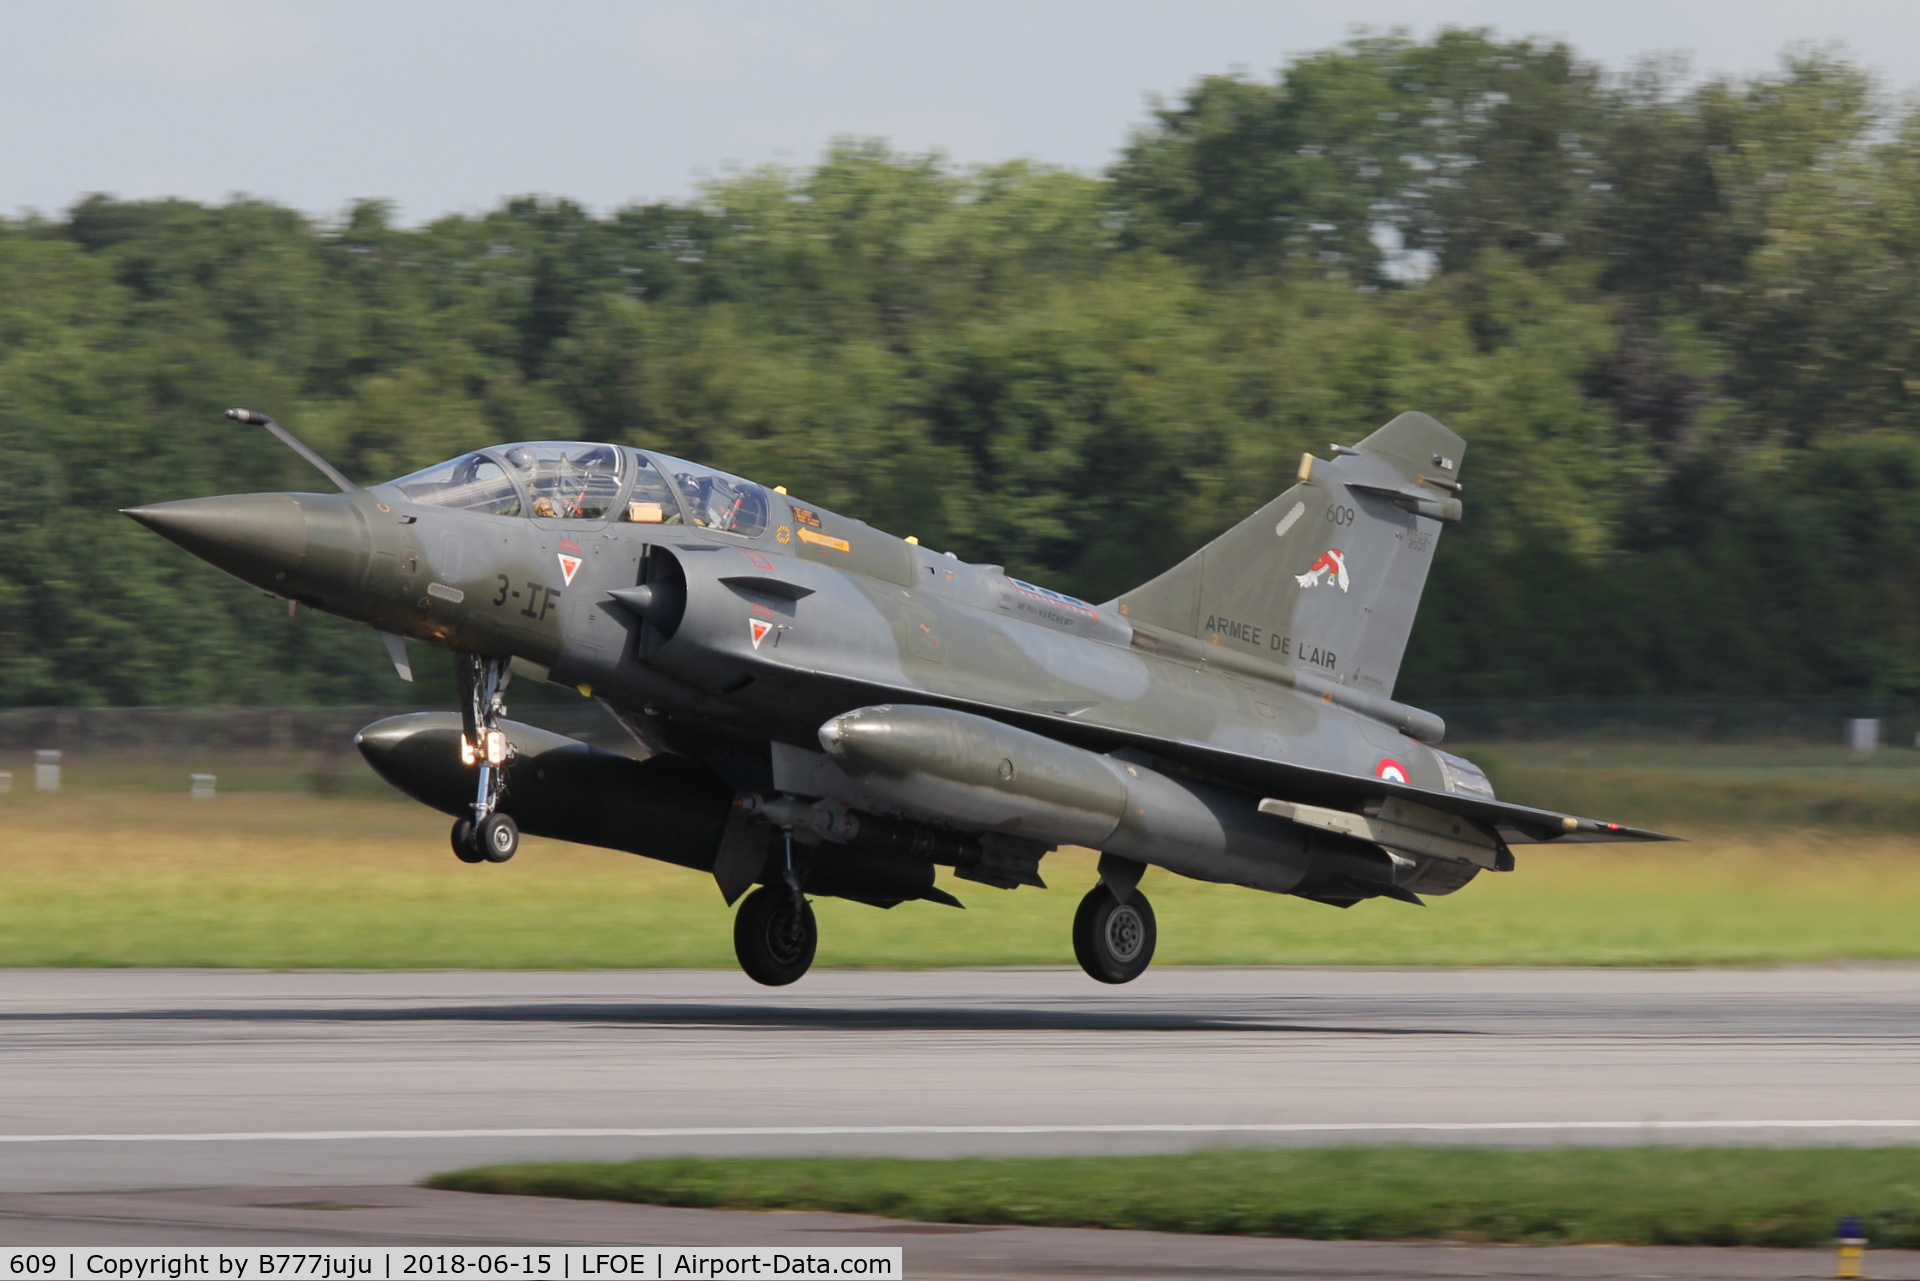 609, Dassault Mirage 2000D C/N 403, at Evreux
new code 3-IF